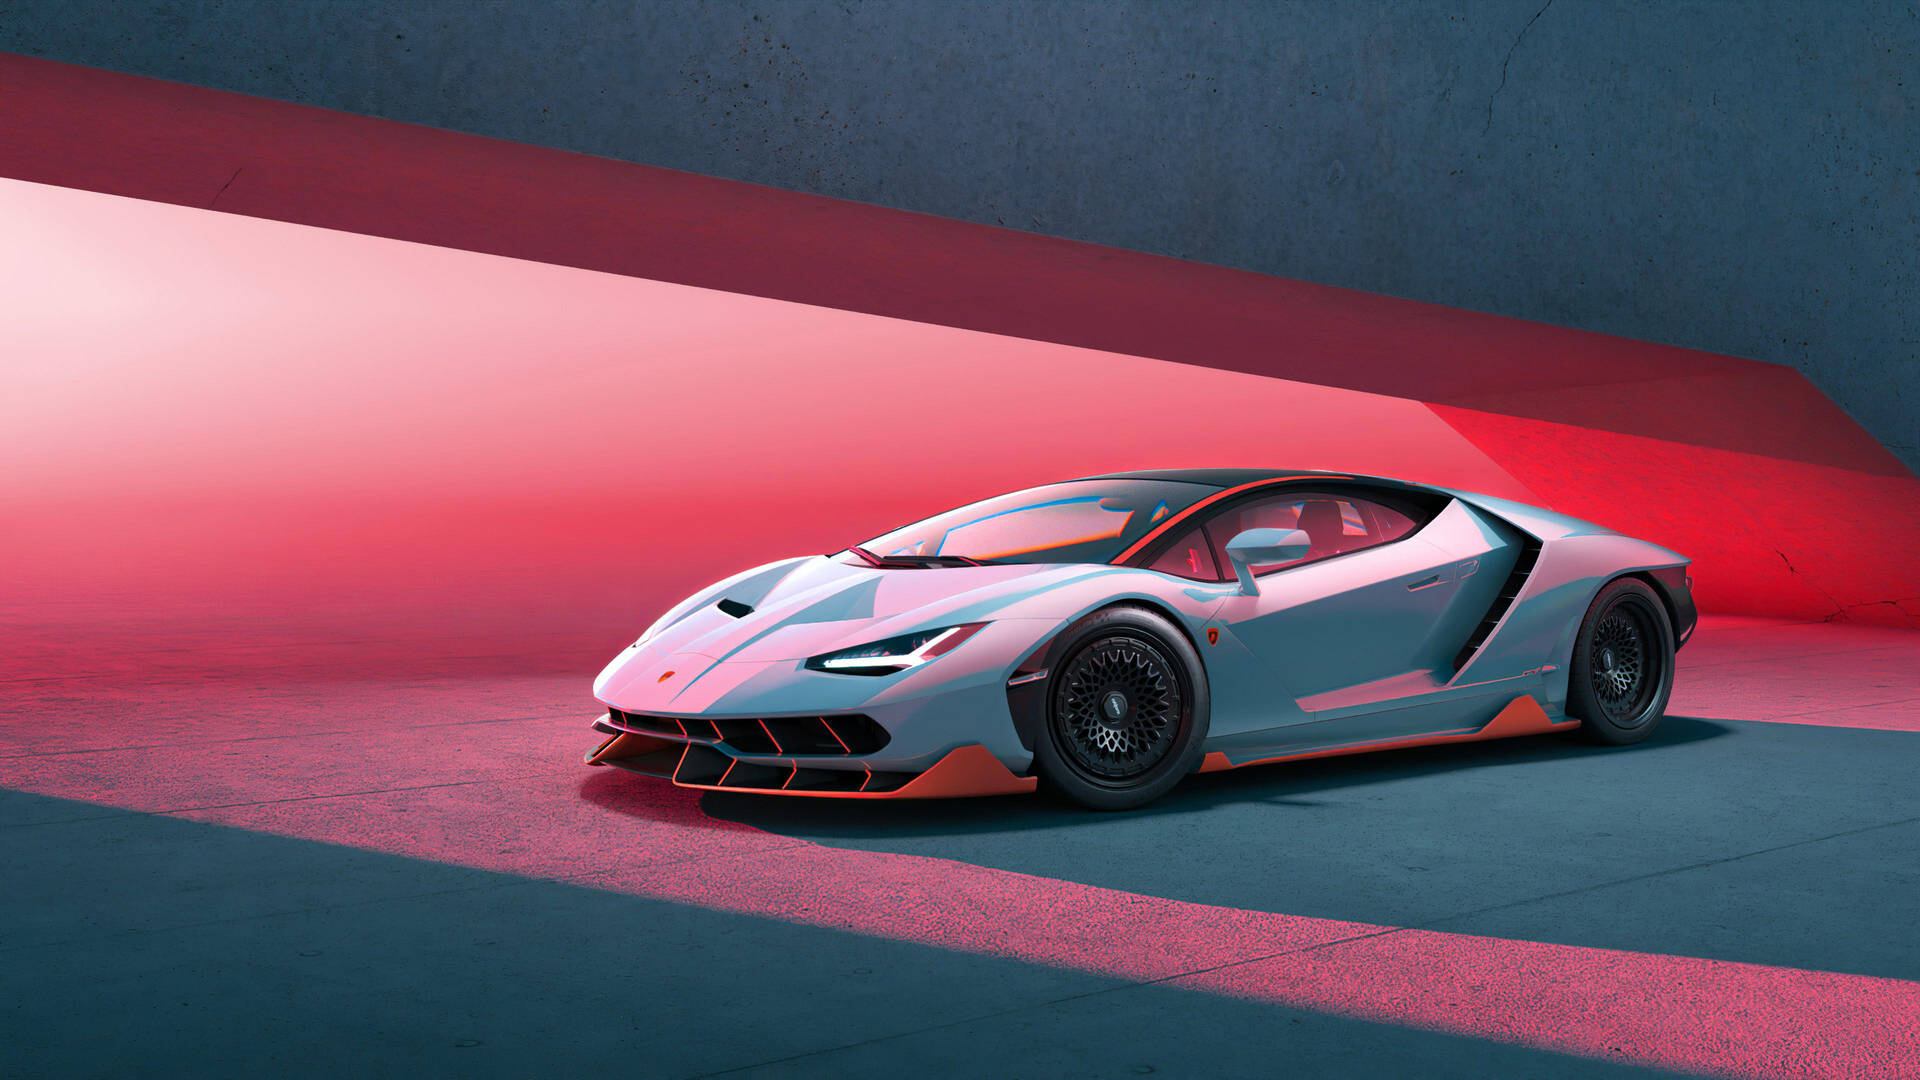 Cool Cars: Lamborghini Under Red Lights Wallpaper